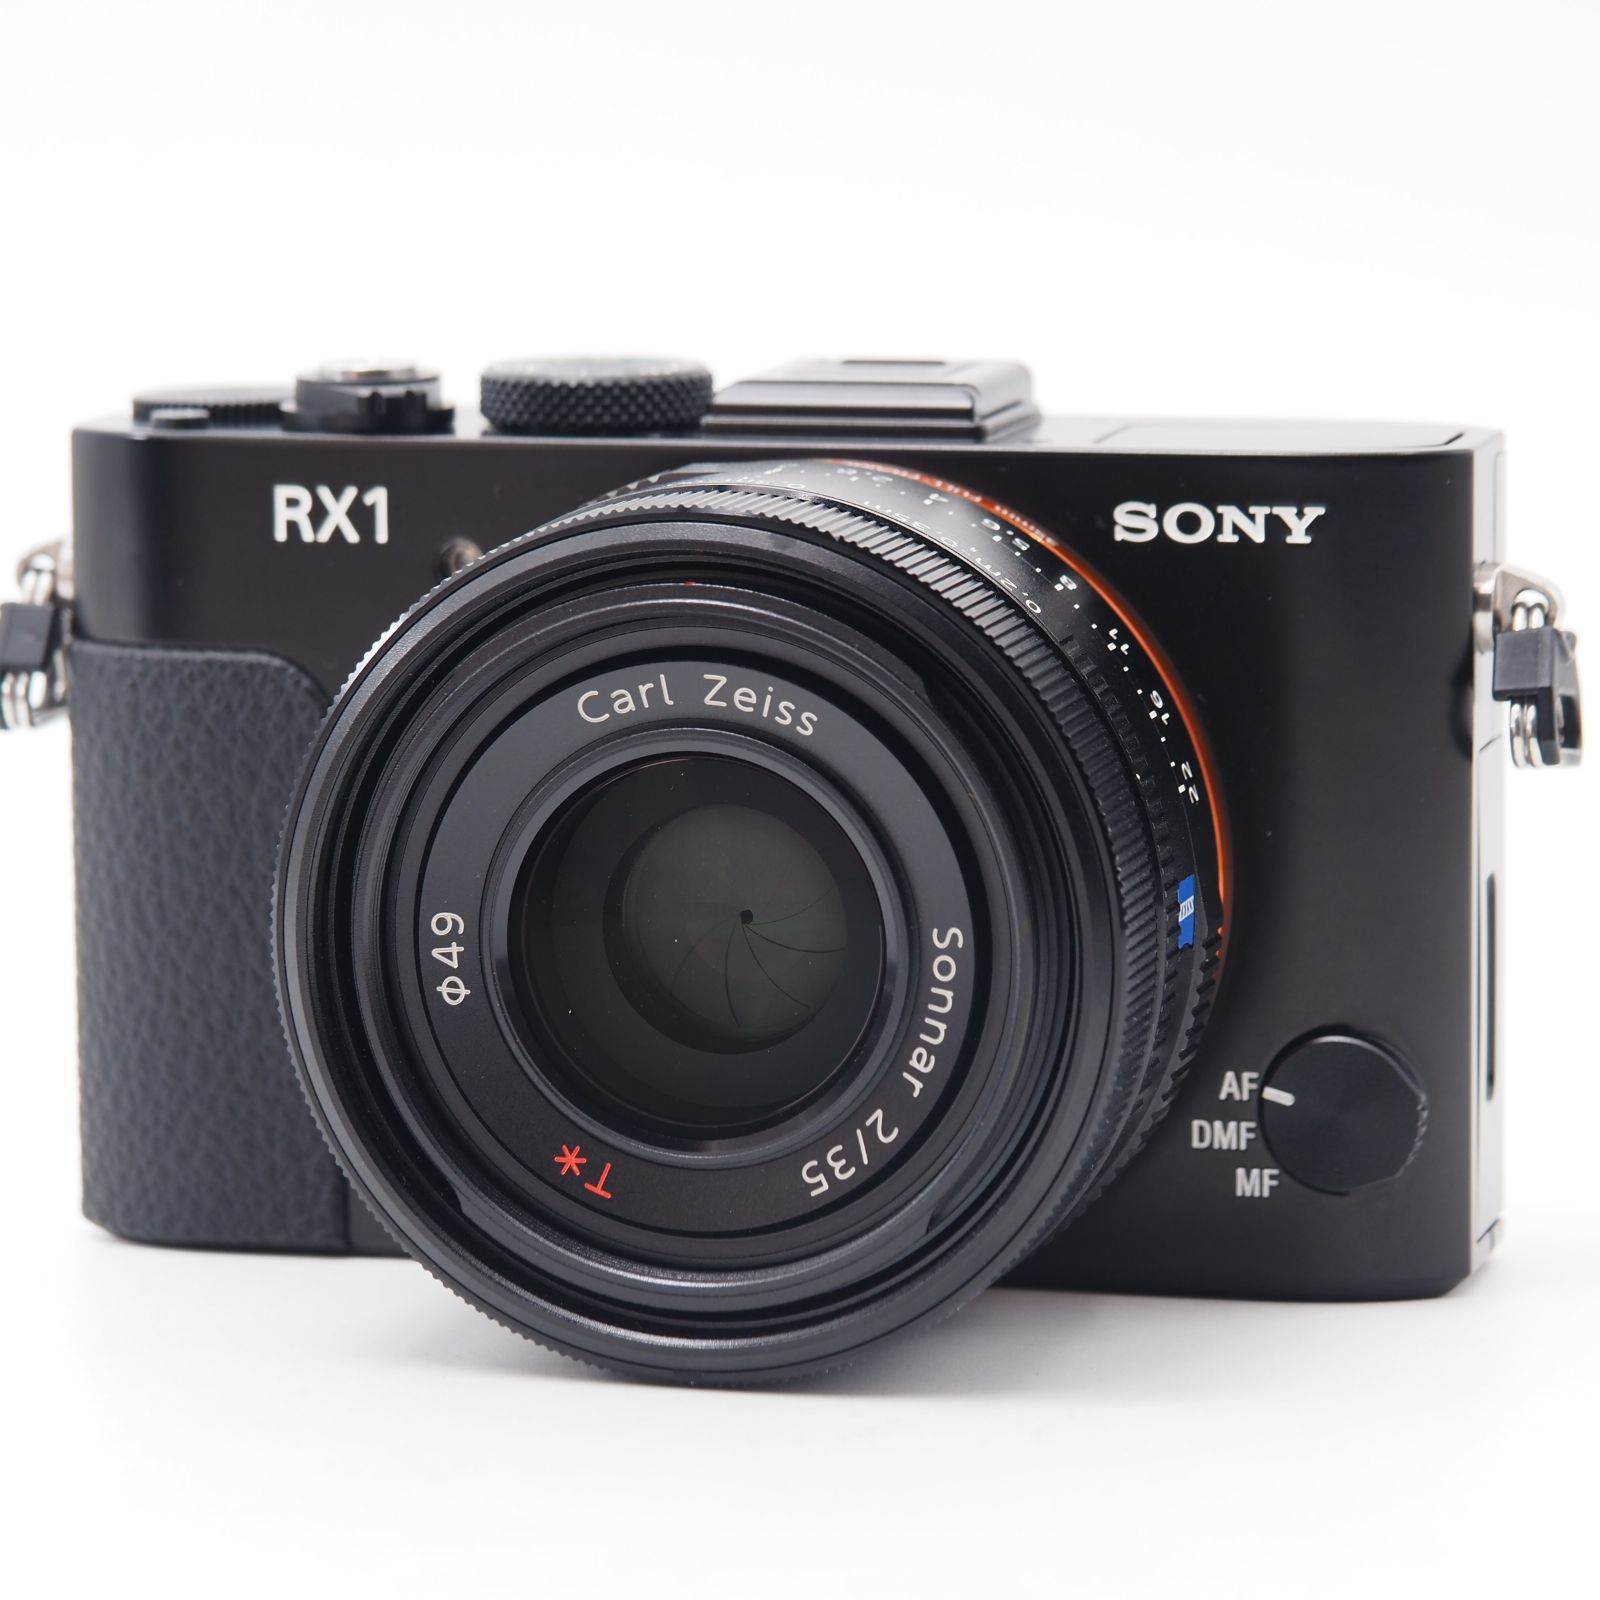 SONY 102206☆極上品☆ソニー SONY デジタルスチルカメラ Cyber-shot RX1 2430万画素CMOS 光学1倍 DSC-RX1